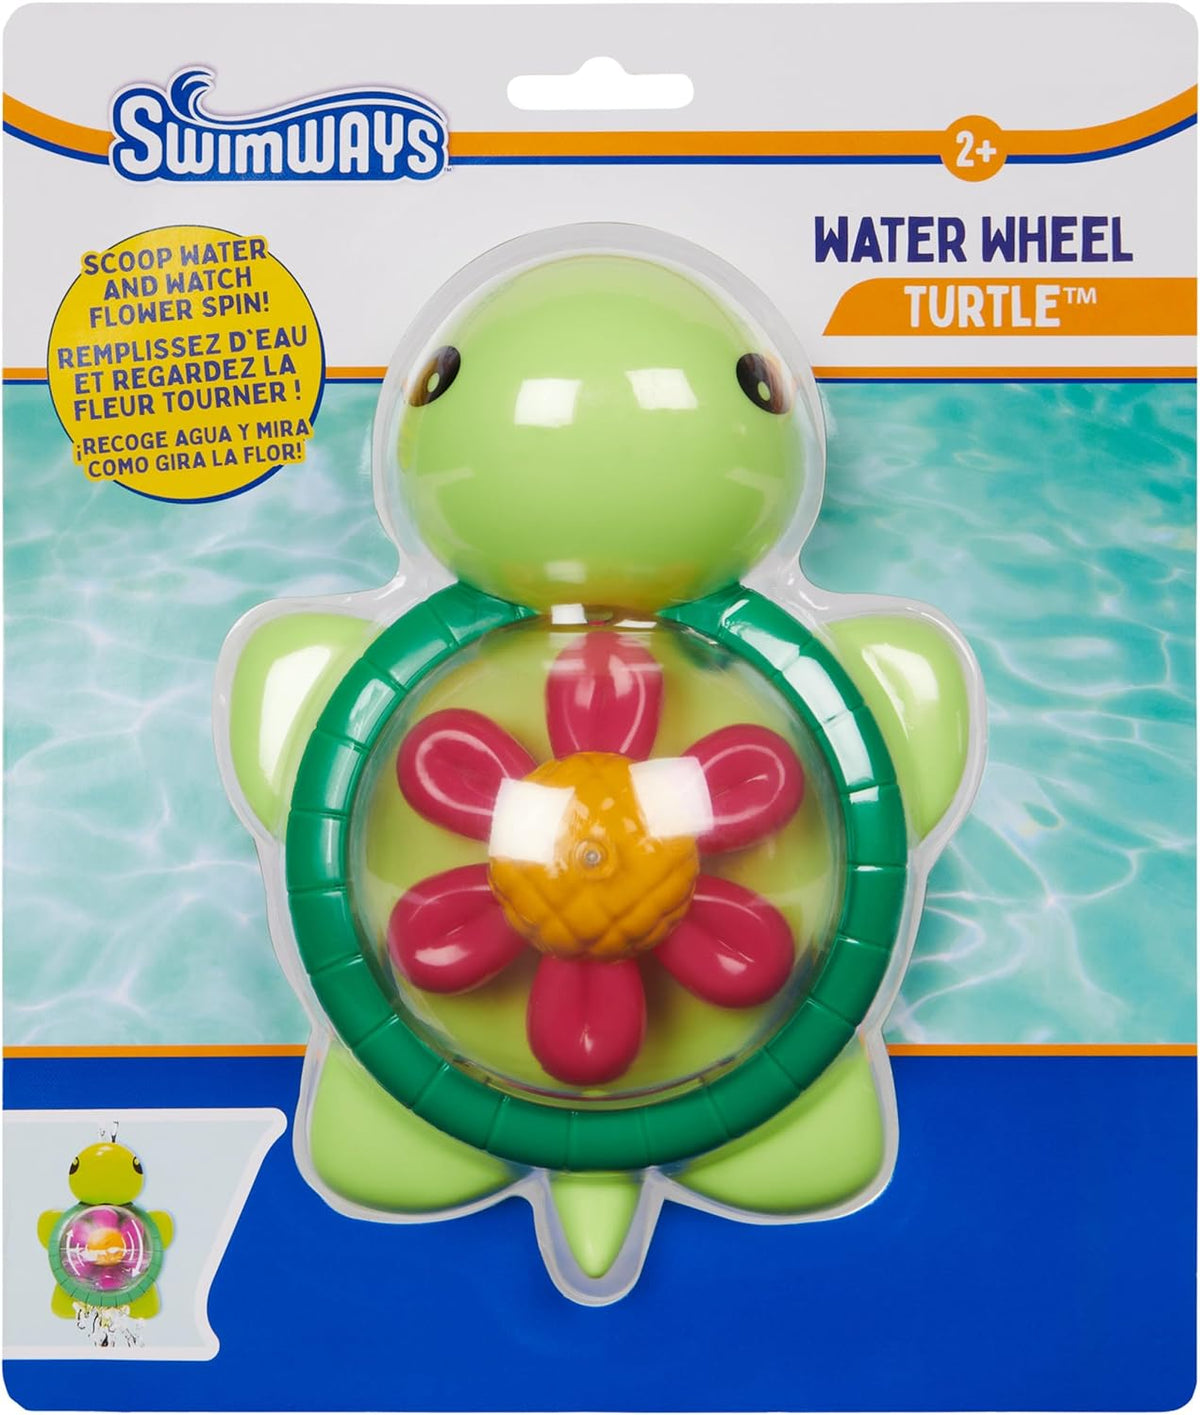 Water Wheel Turtle